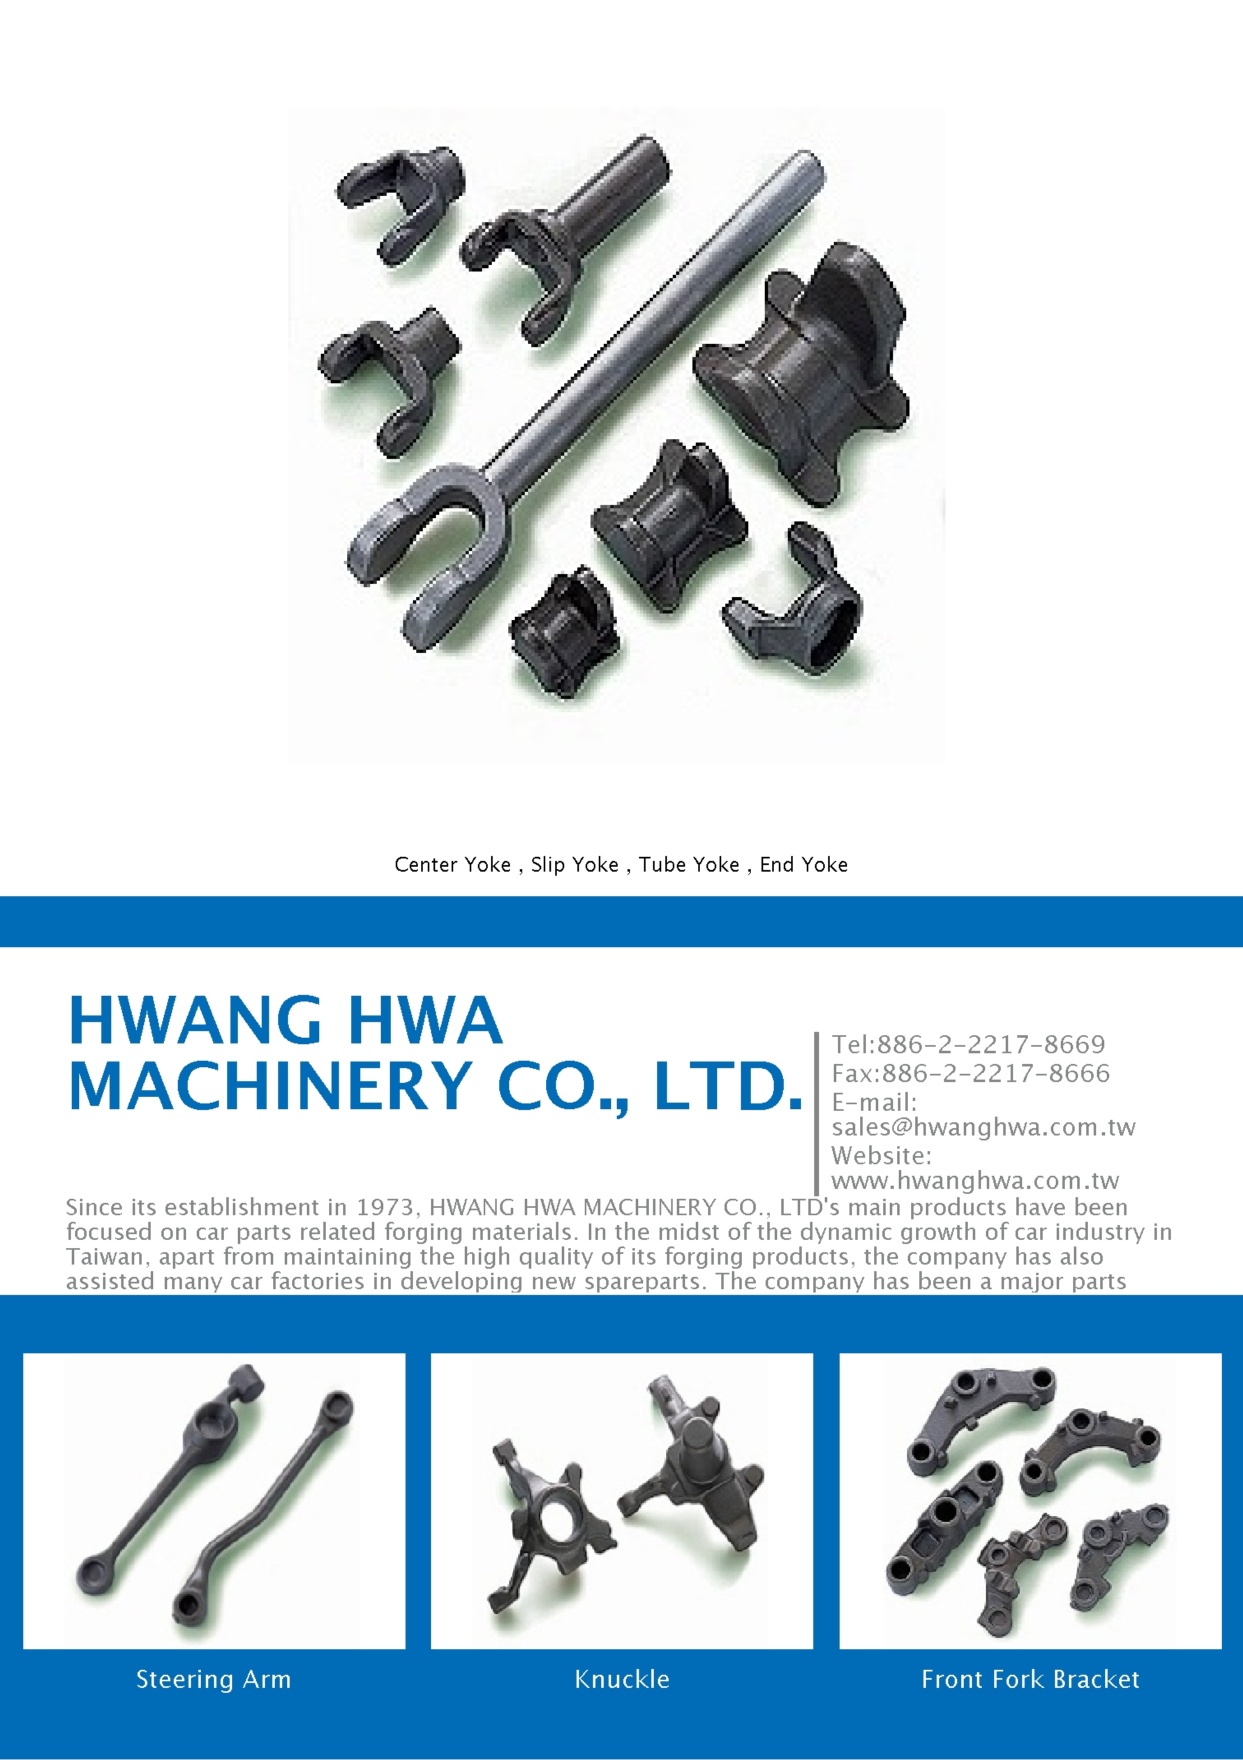 HWANG HWA MACHINERY CO., LTD.